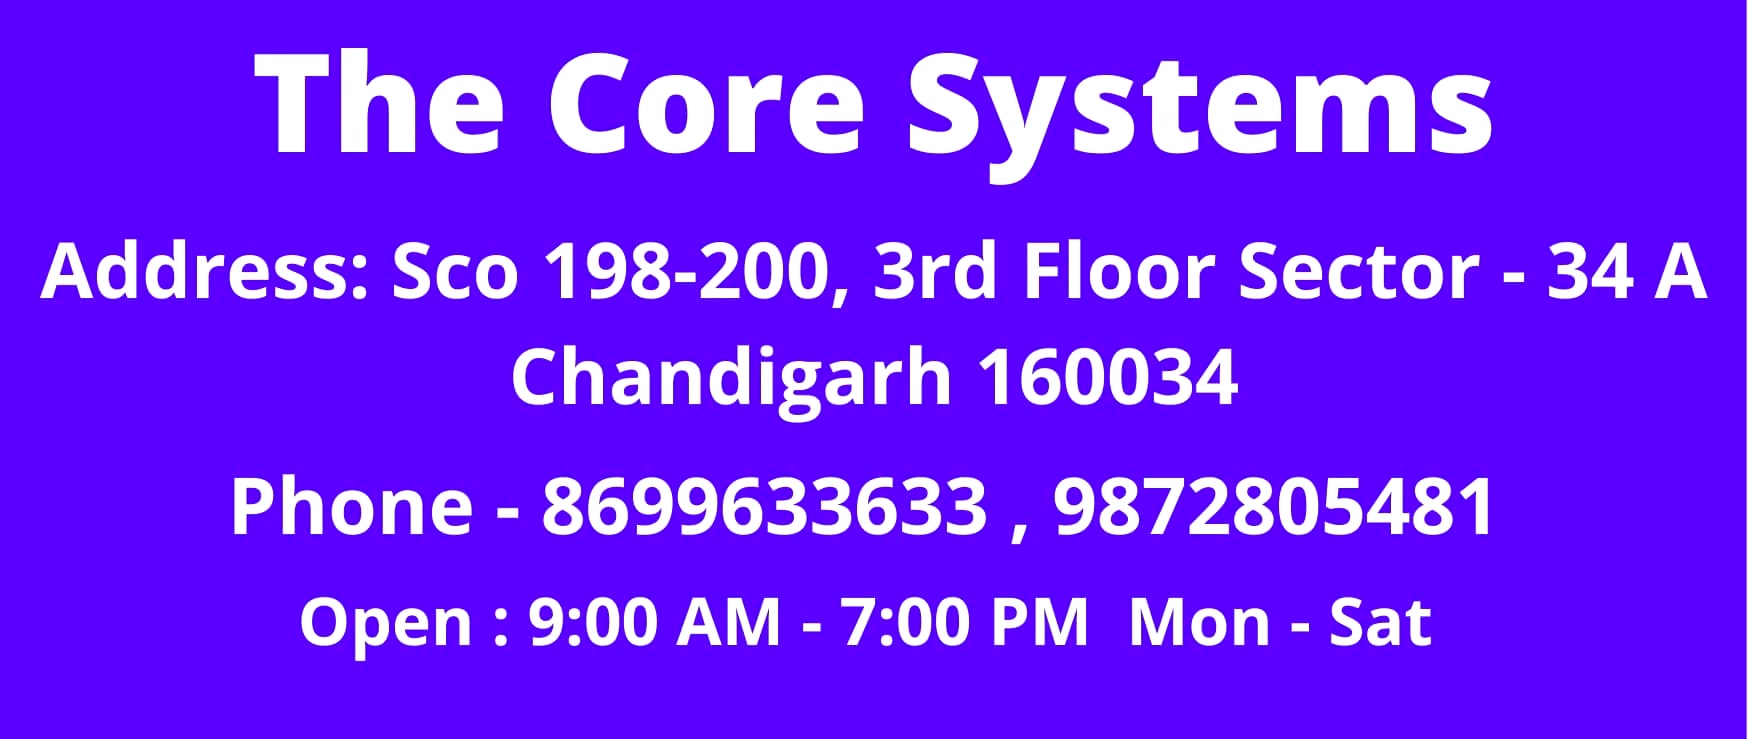 PLC training in Chandigarh plc training in chandigarh PLC training in Chandigarh | The Core Systems 2